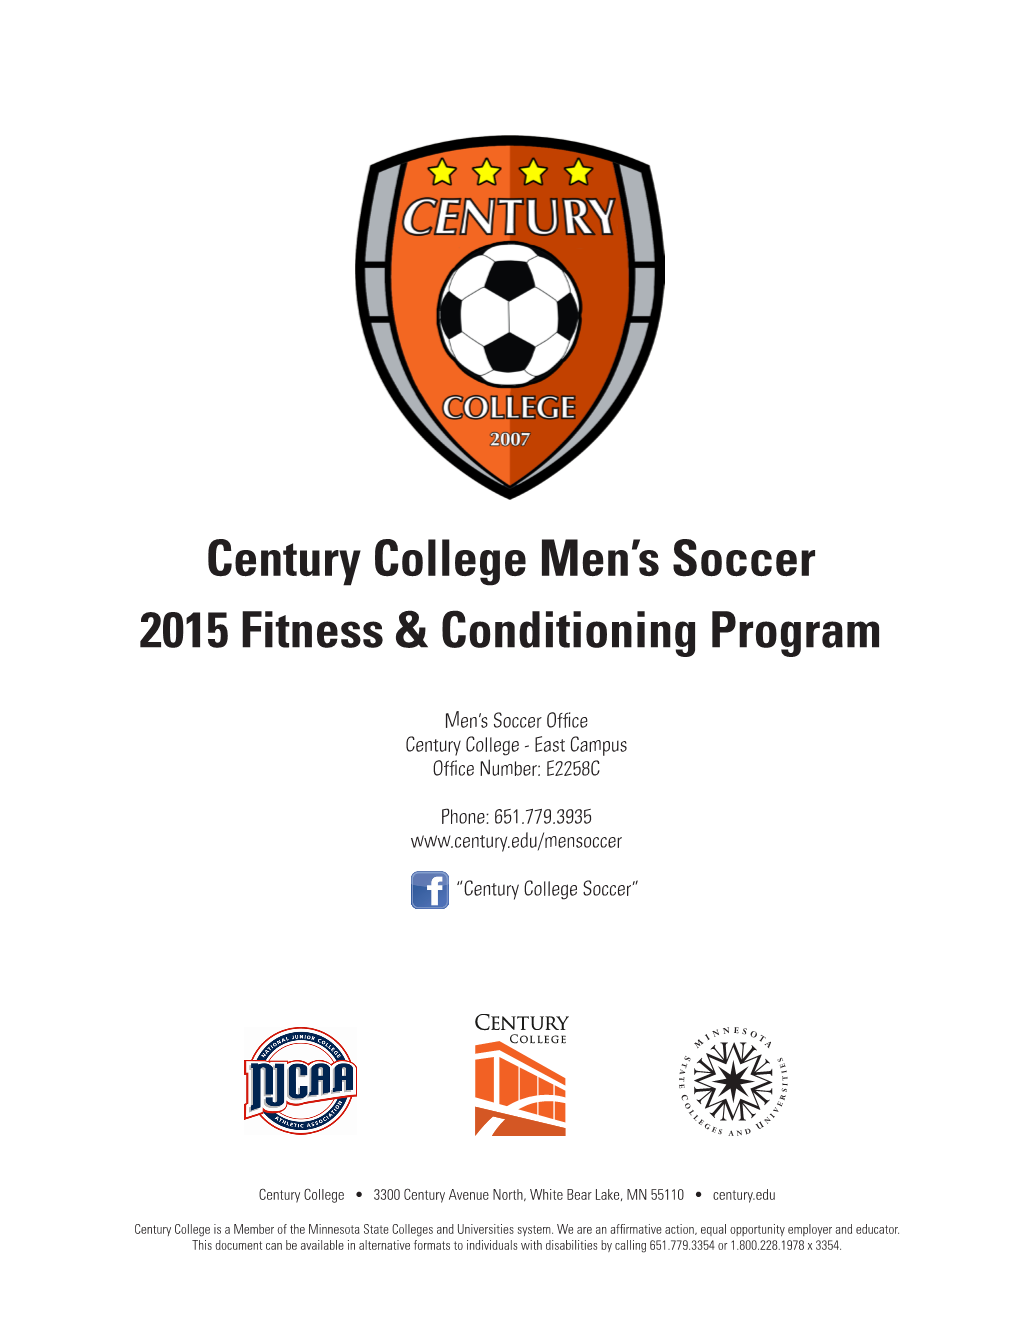 Century College Men's Soccer 2015 Fitness & Conditioning Program